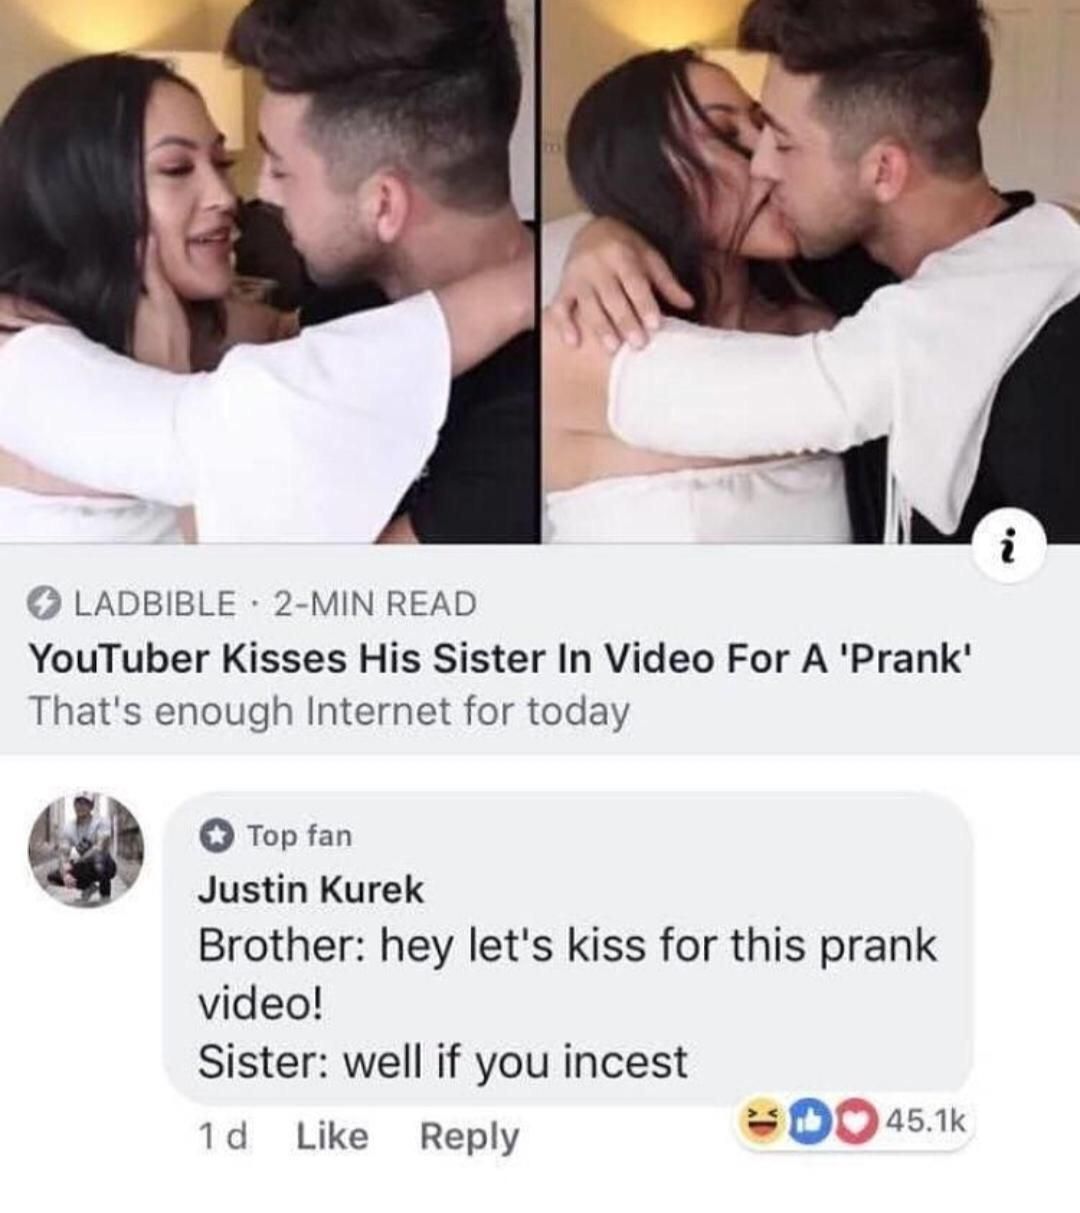 So called prank